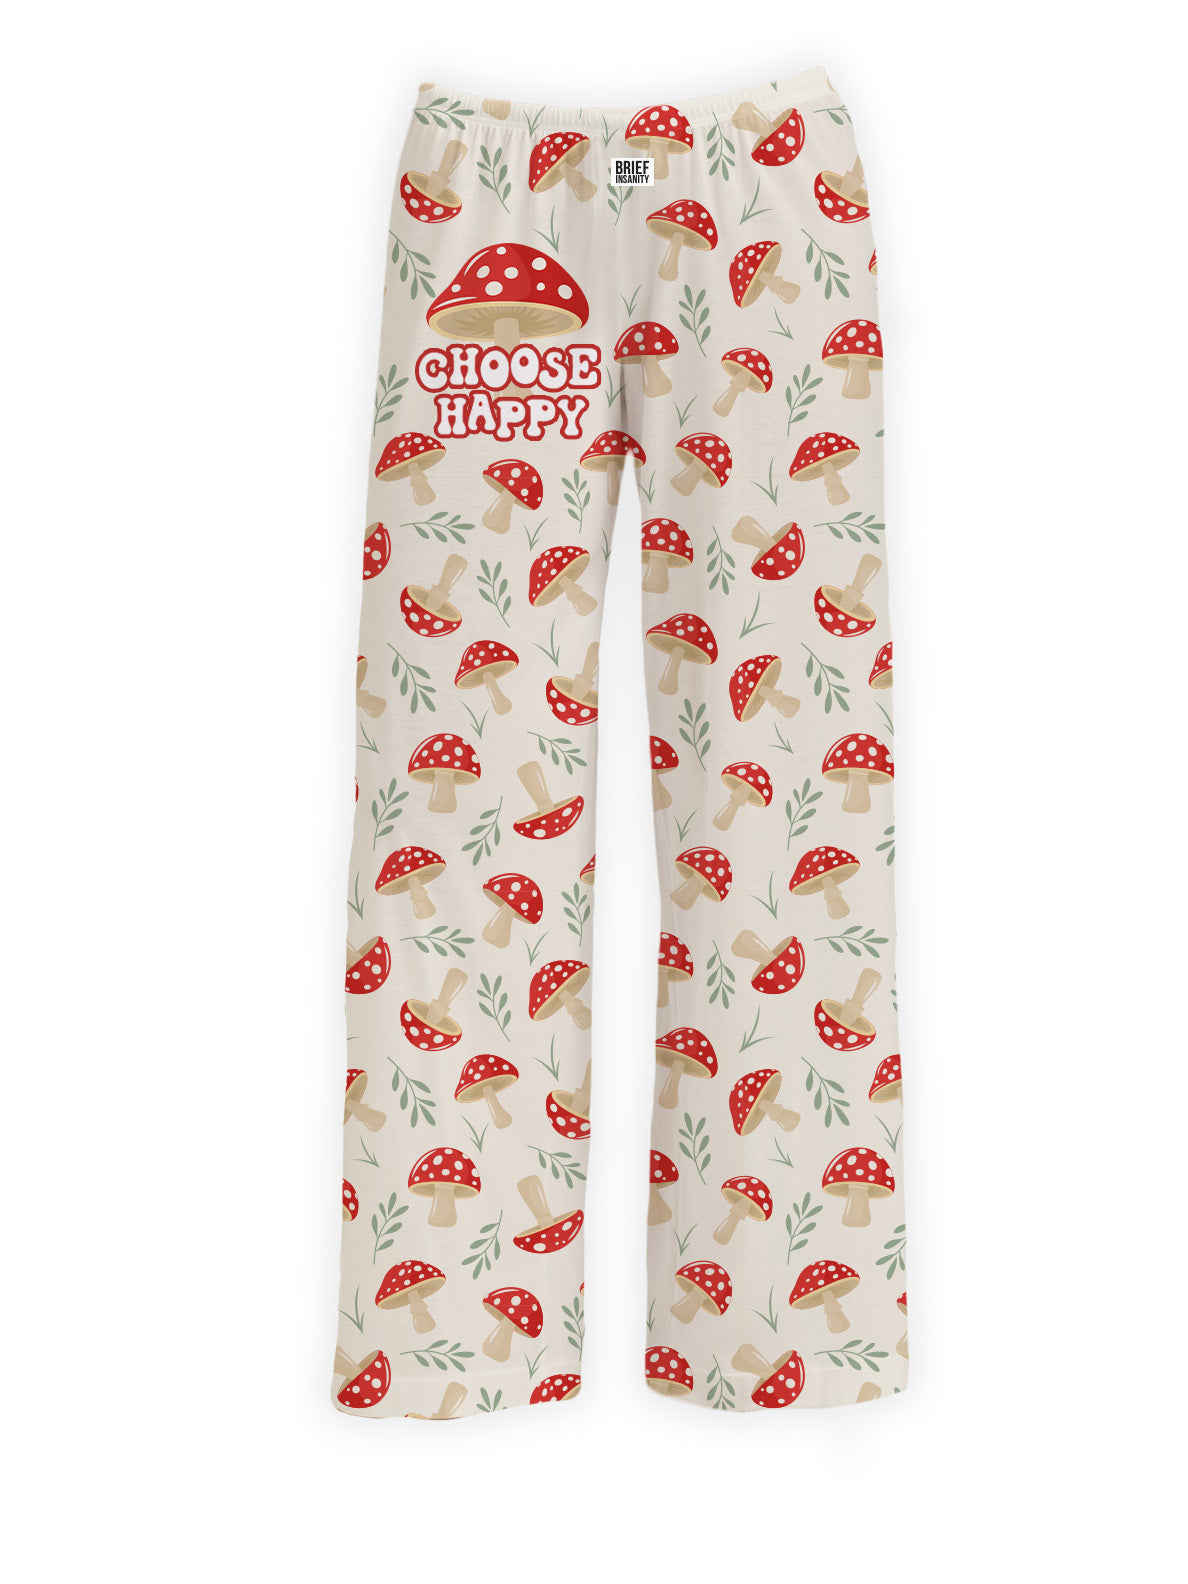 BRIEF INSANITY's Choos Happy Mushroom Pajama Lounge Pants